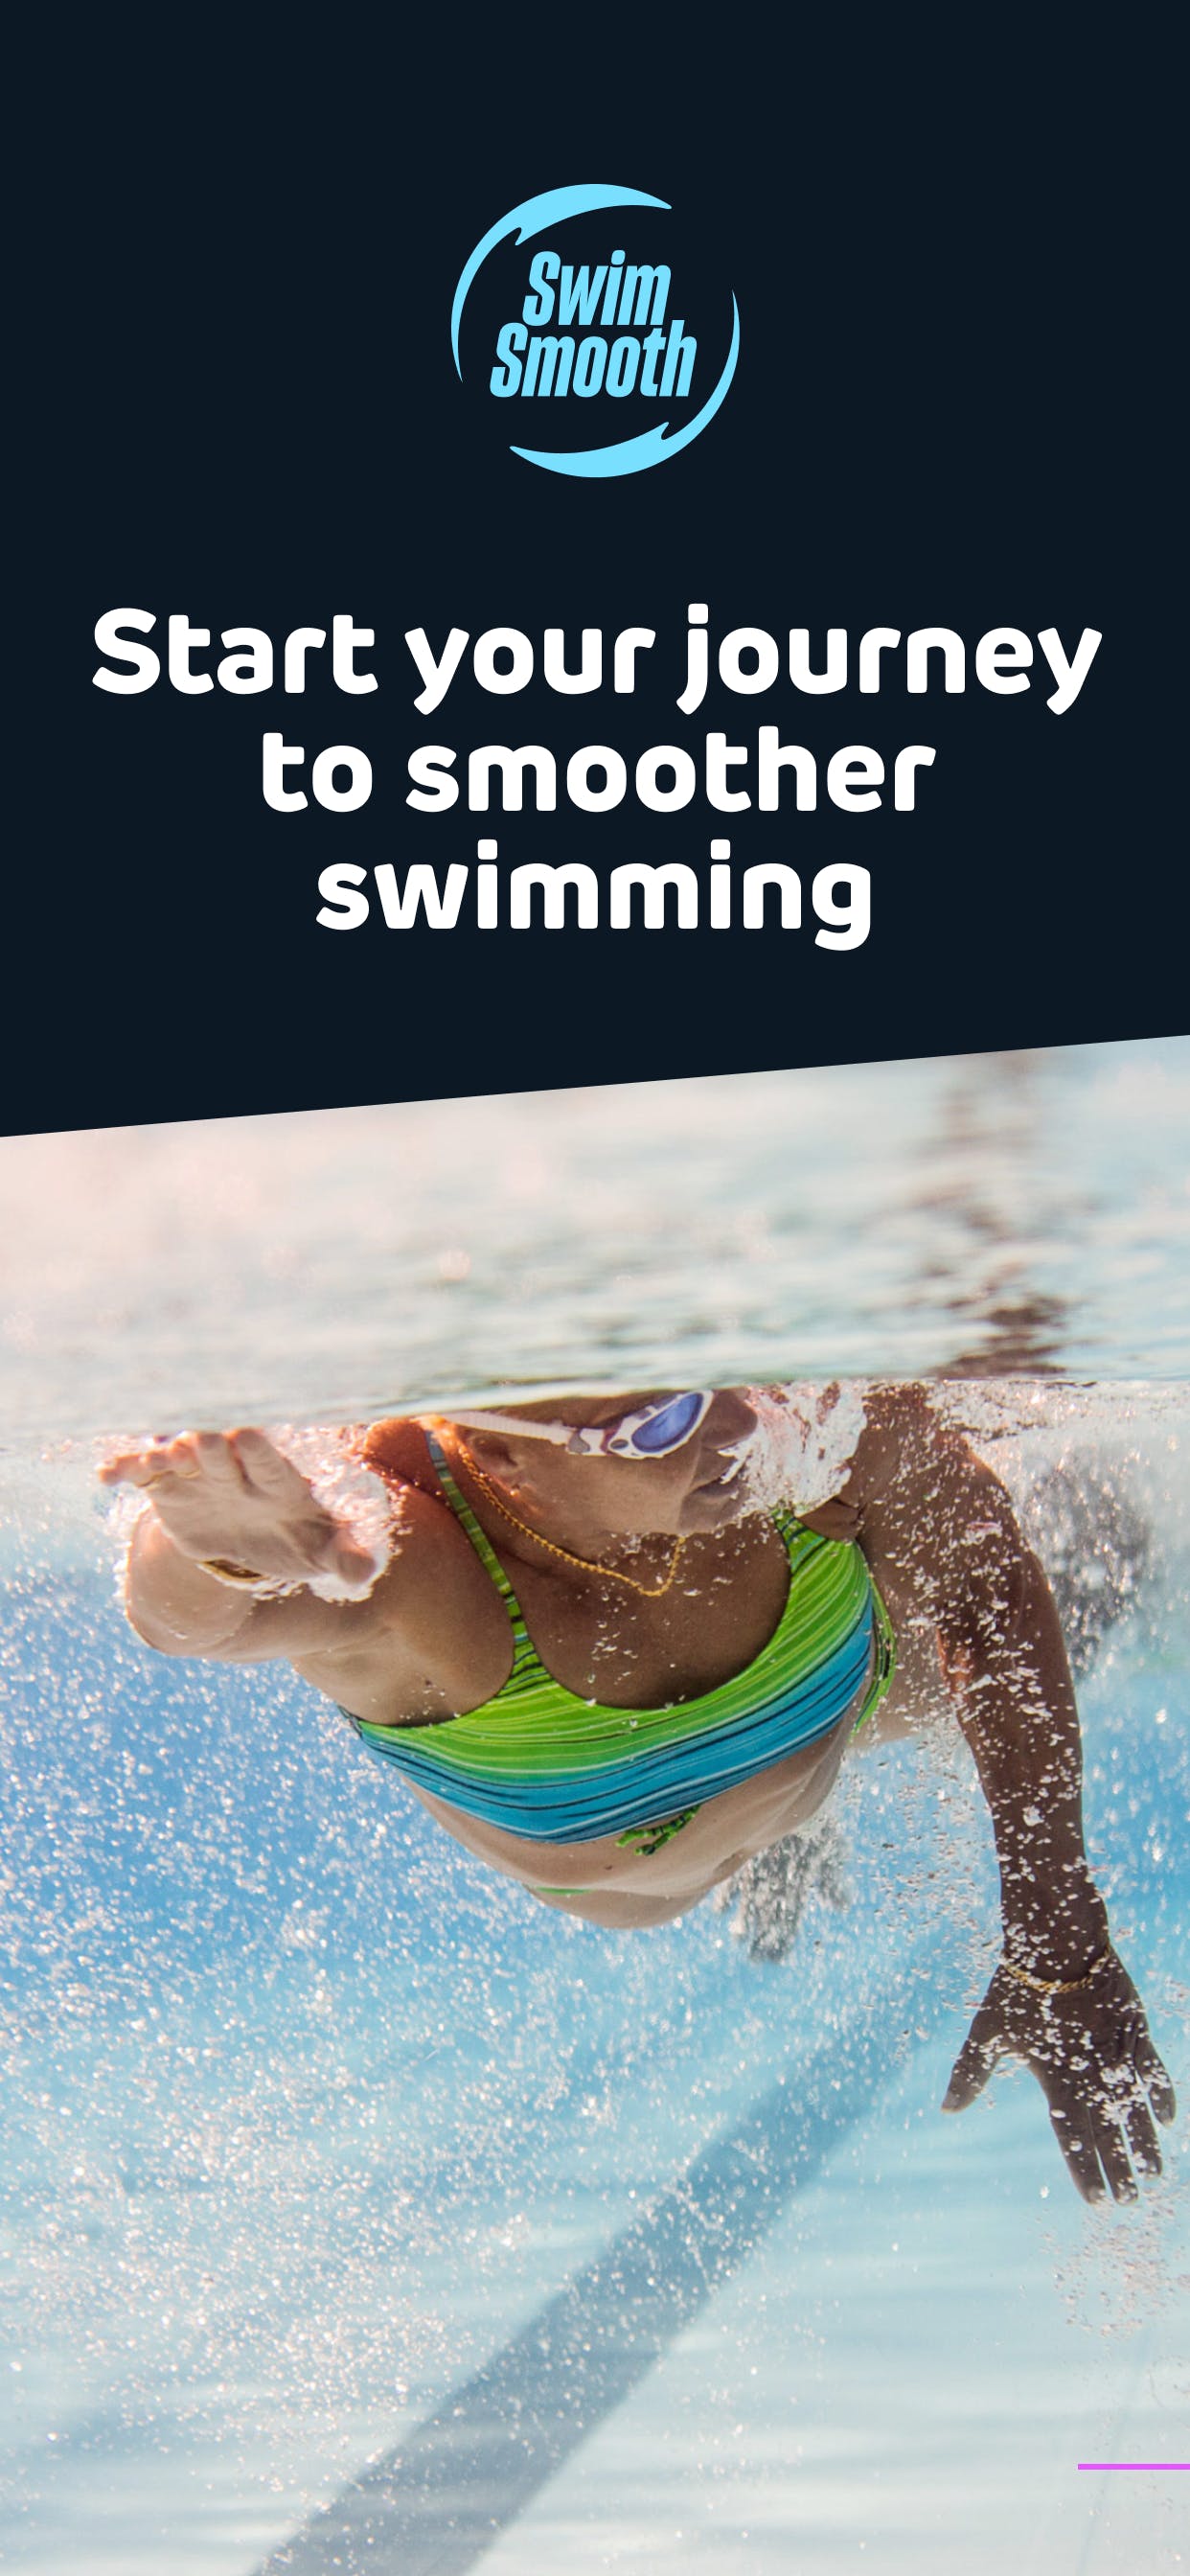 Swim Smooth media 1